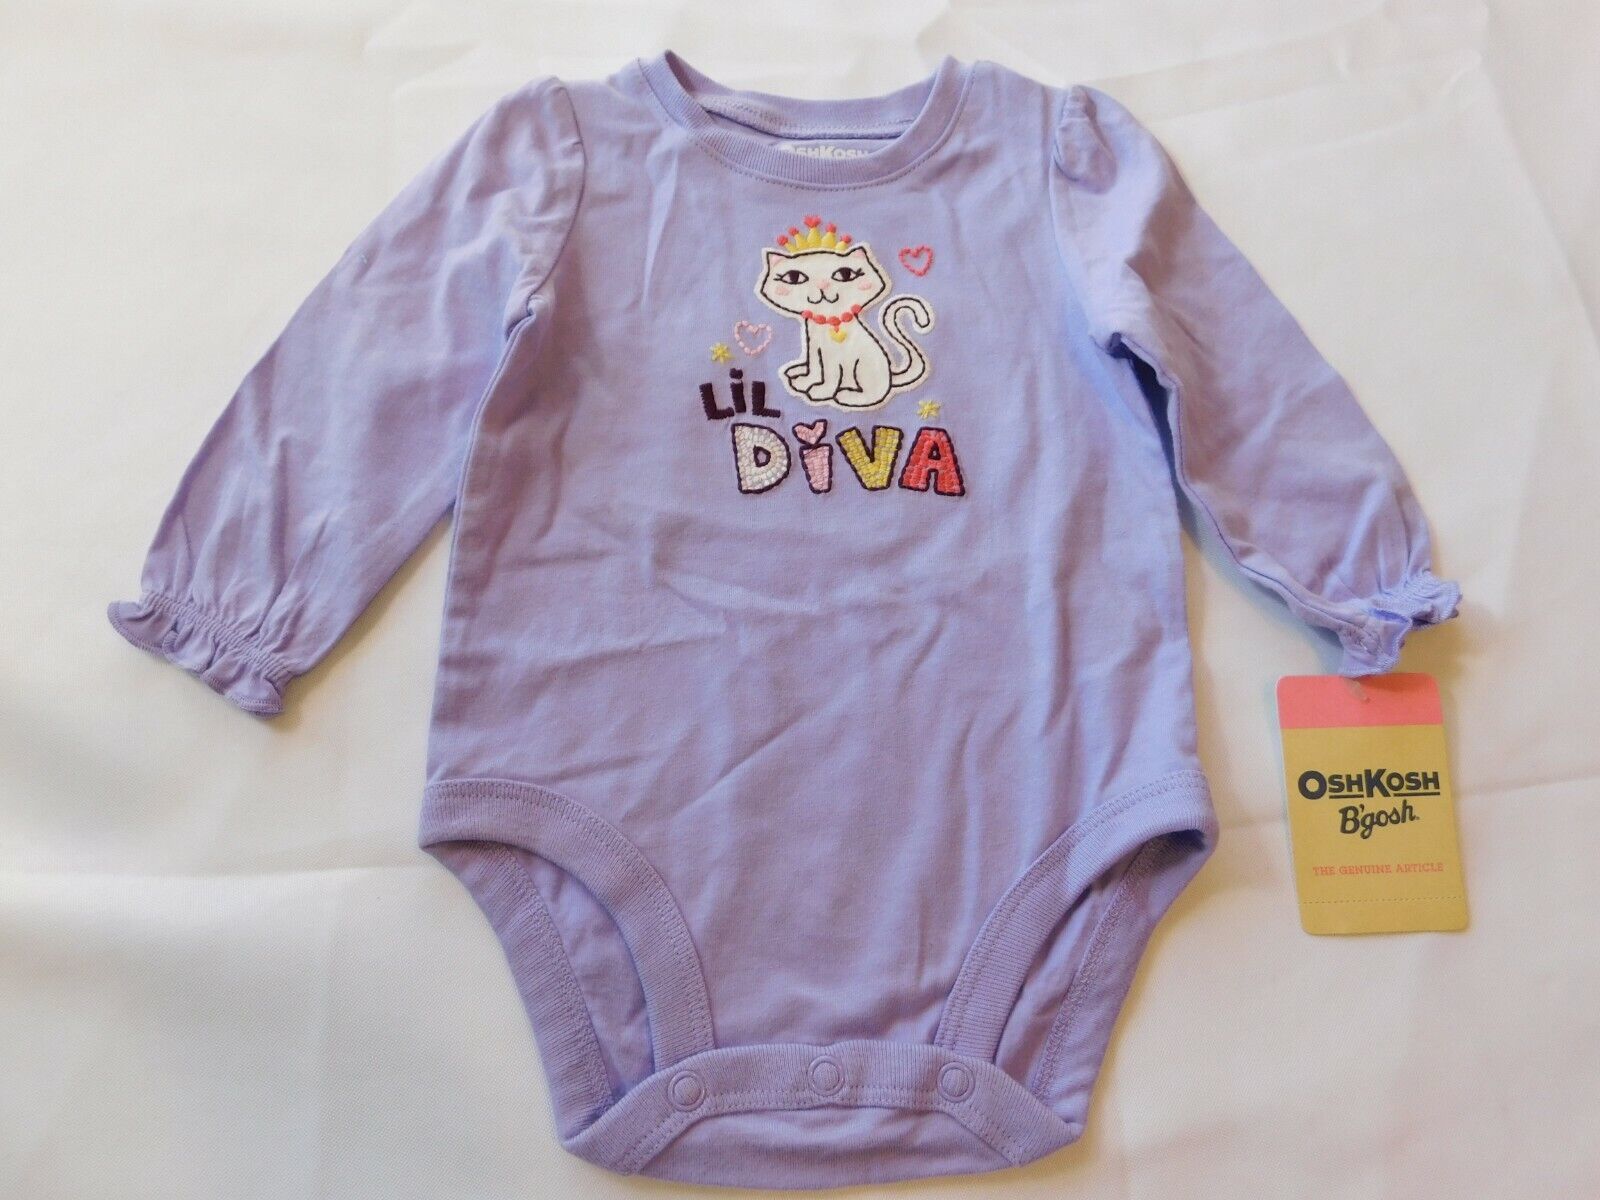 Osh Kosh B'gosh Baby Girl's Long Sleeve Body Suit "Lil Diva" Purple 3 Months NWT - $12.86